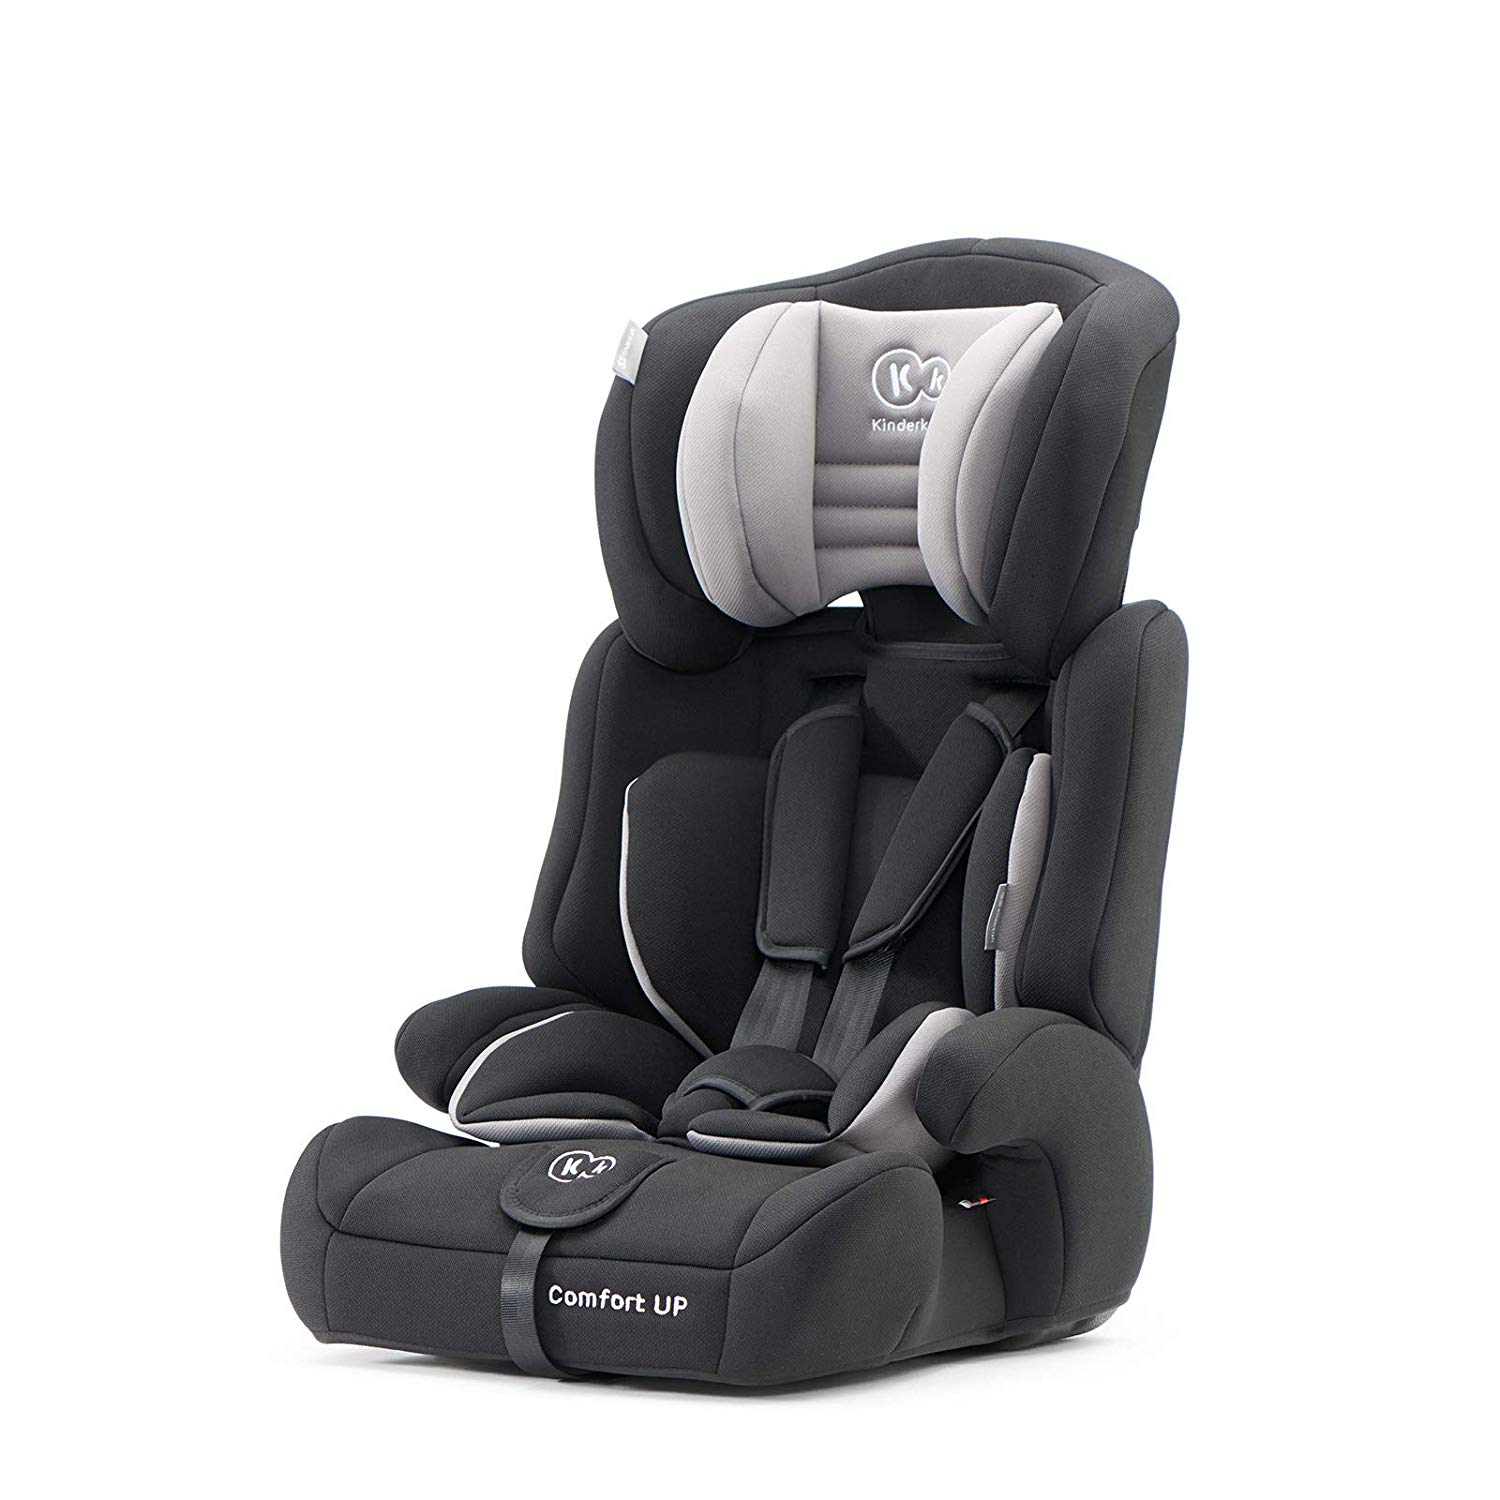 Kinderkraft Comfort UP Child’s Car Seat - For Children Weighing 9 - 36 kg, Groups 1 2 3